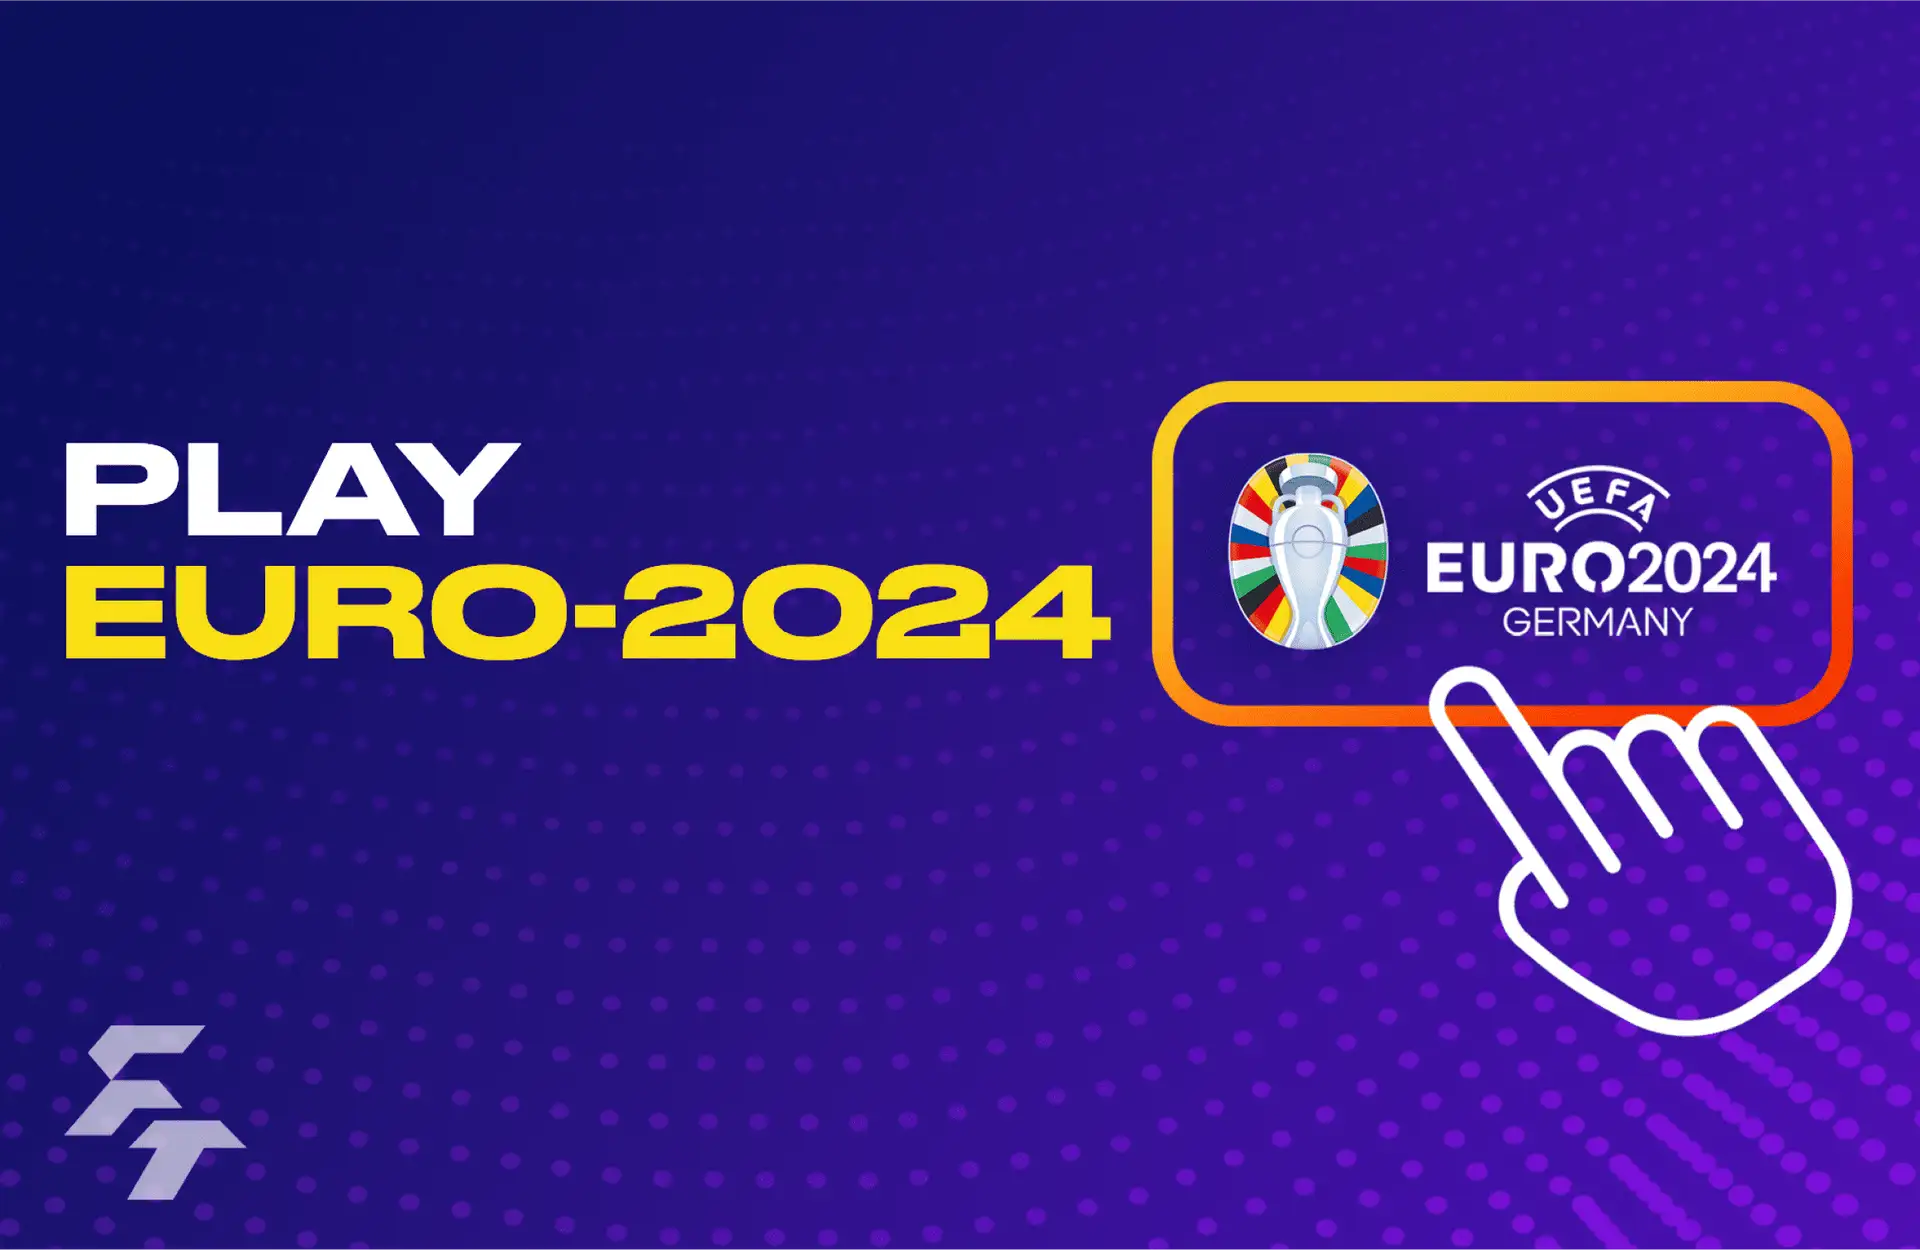 Play Euro-2024